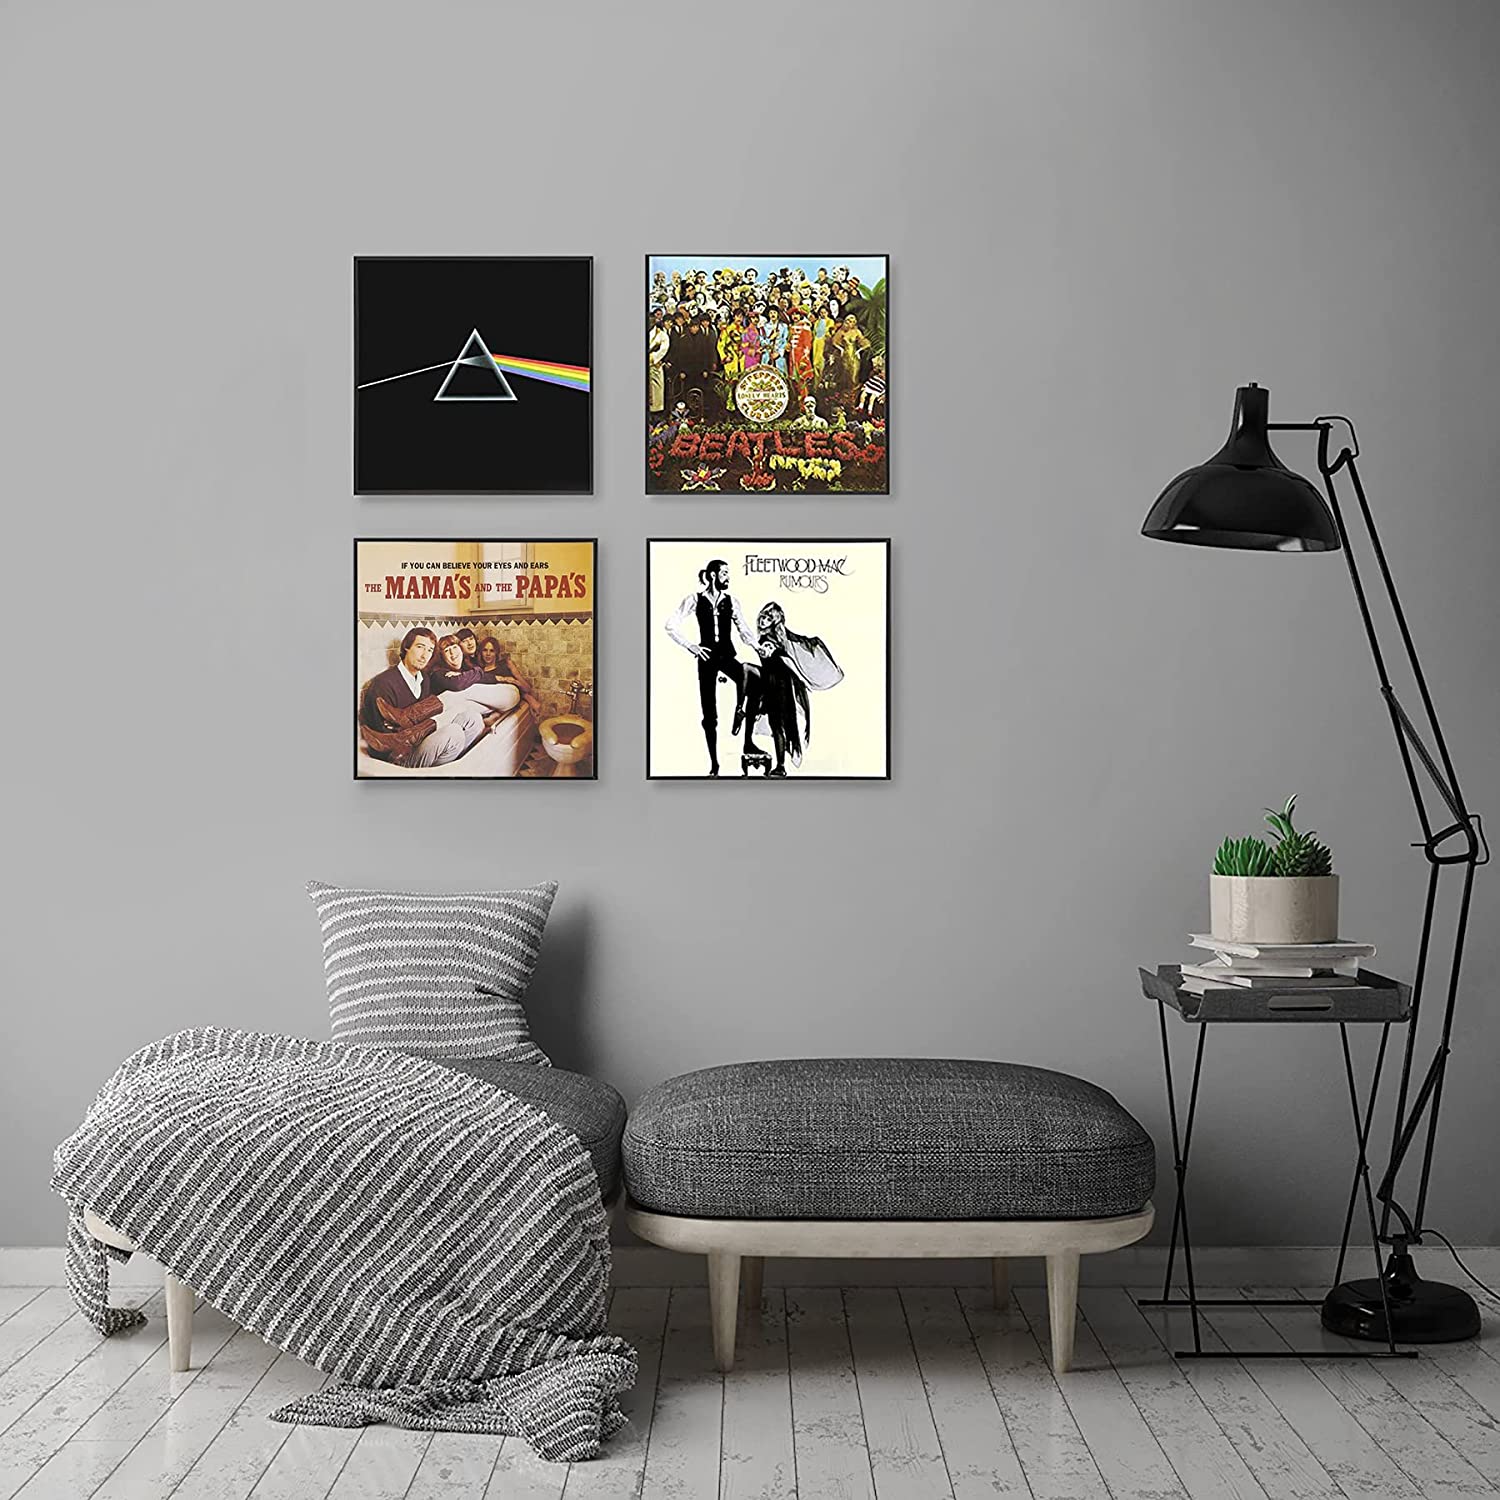 Amazon wall decor ideas albums hanging on living room wall.jpg